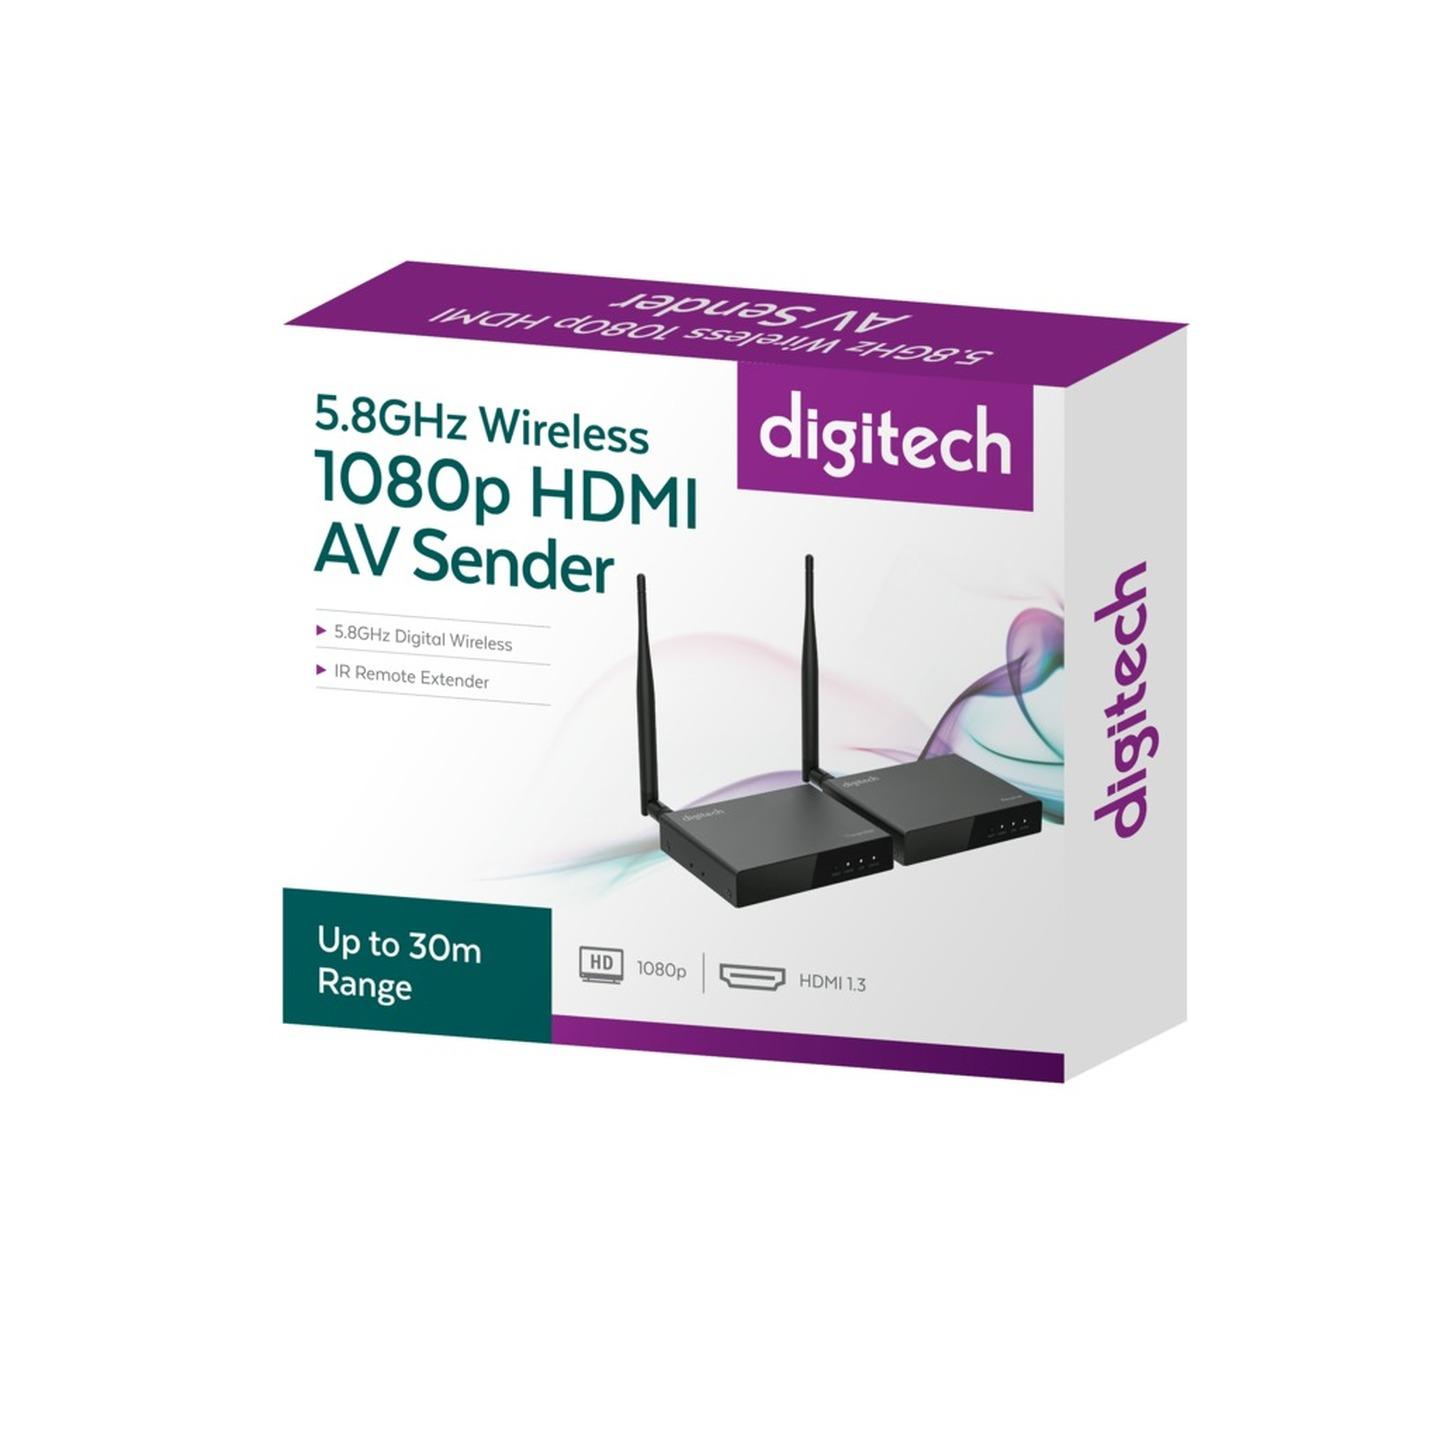 5.8GHz HDMI 1080p Wireless AV Sender